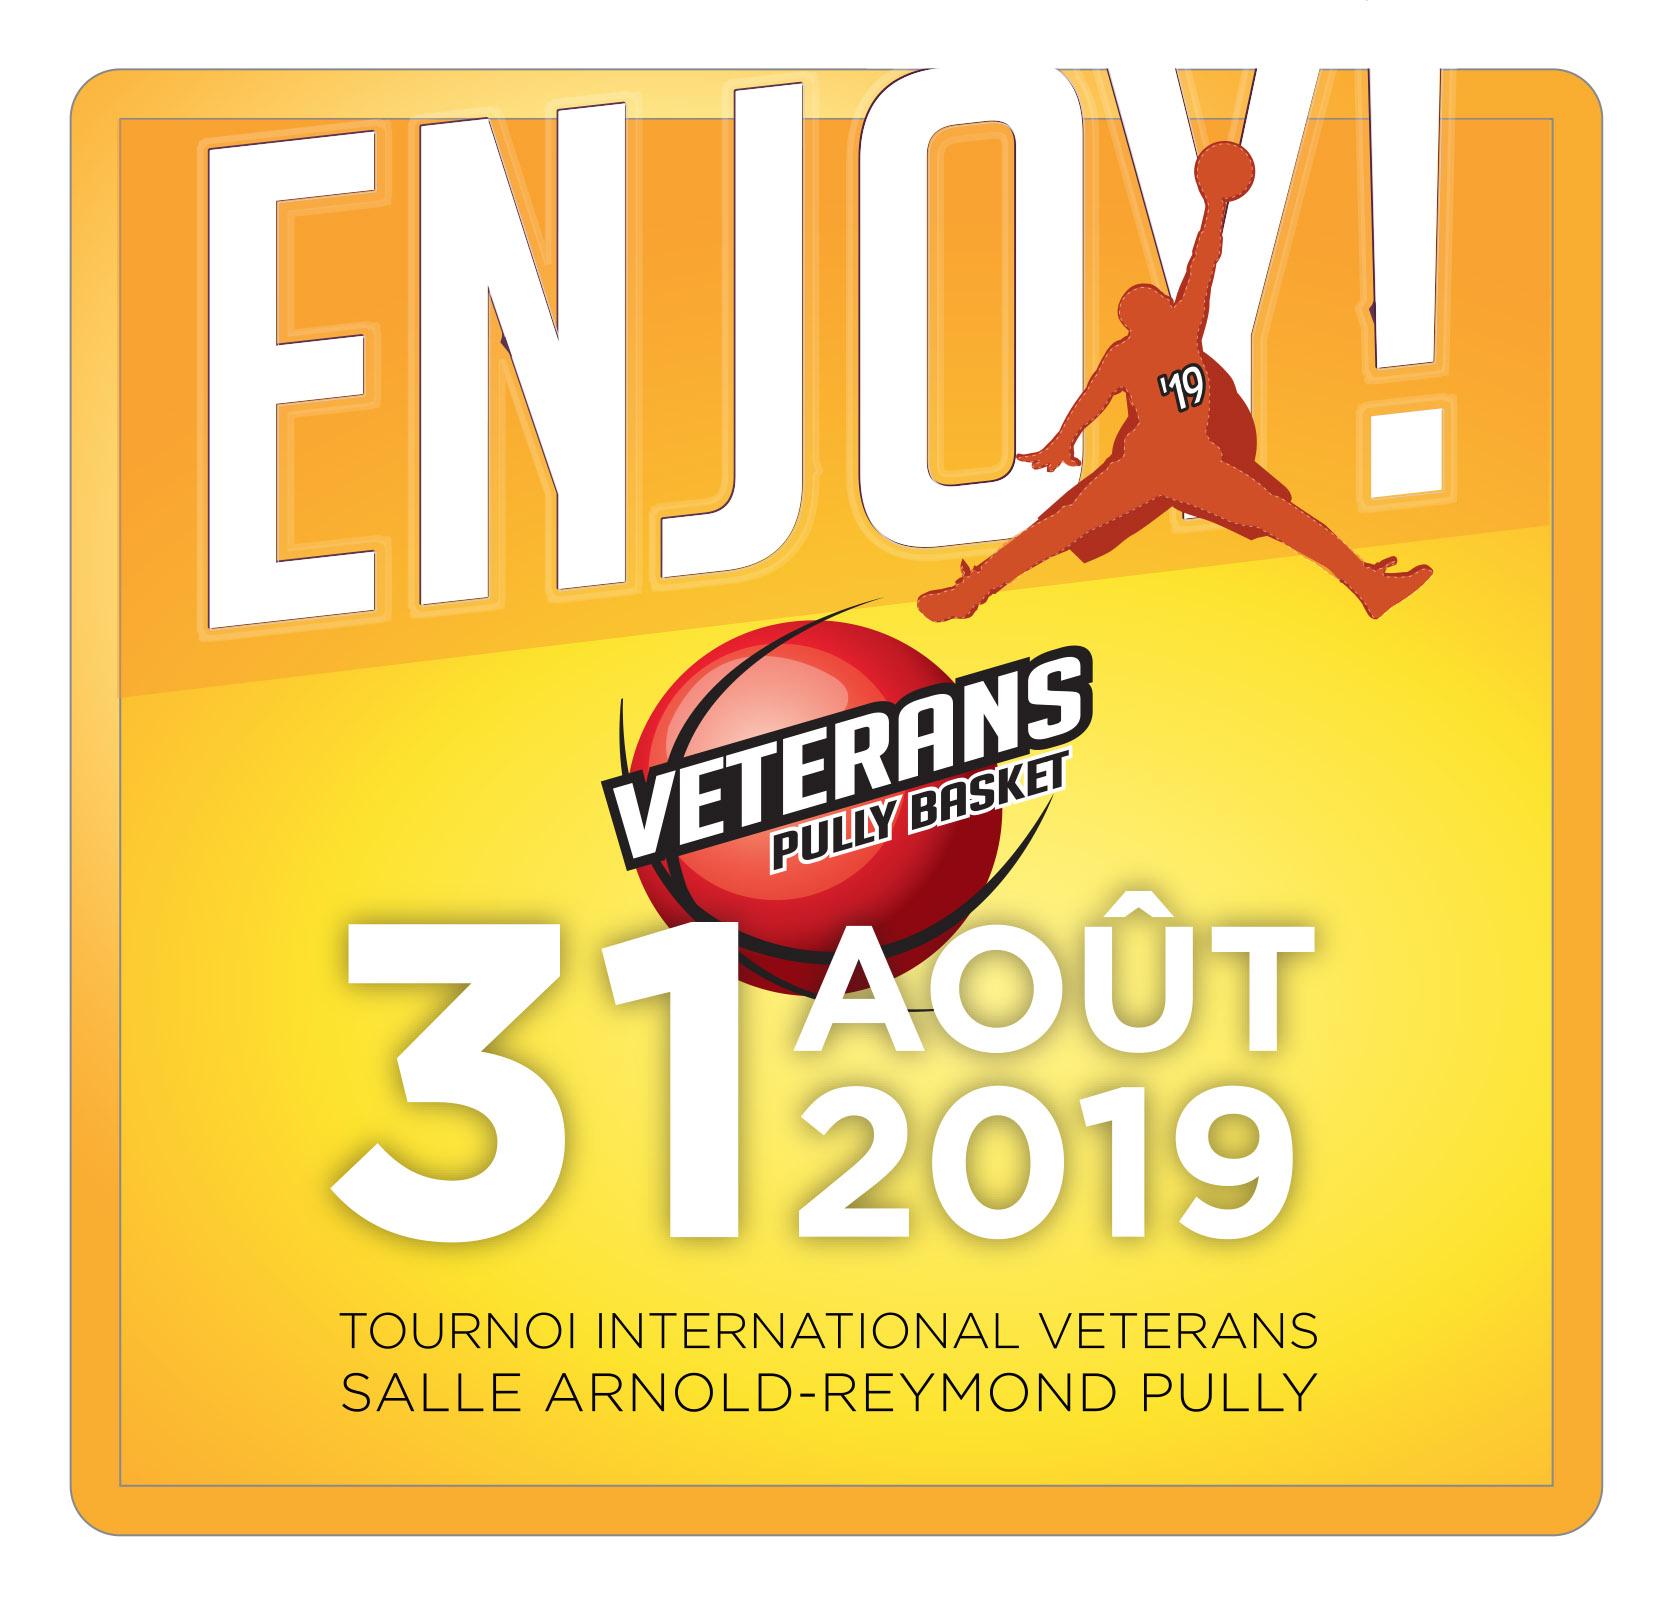 tournoi veterans 2019